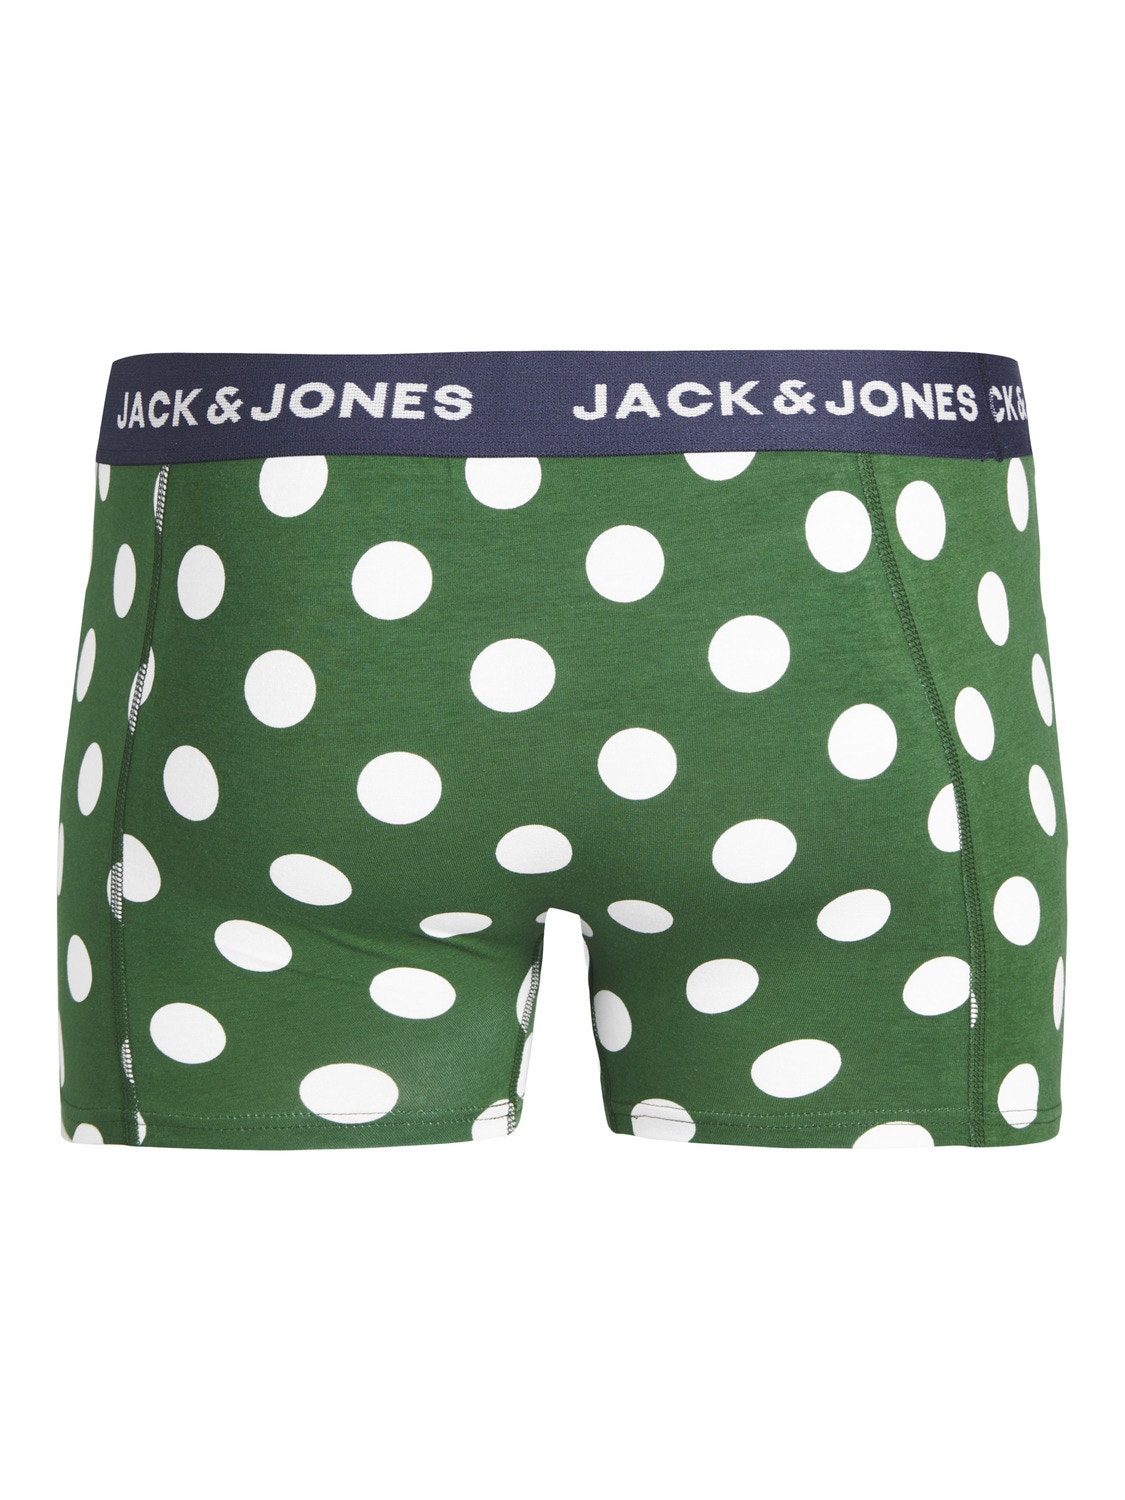 Jack & Jones Confezione da 3 Boxer -Navy Blazer - 12252539